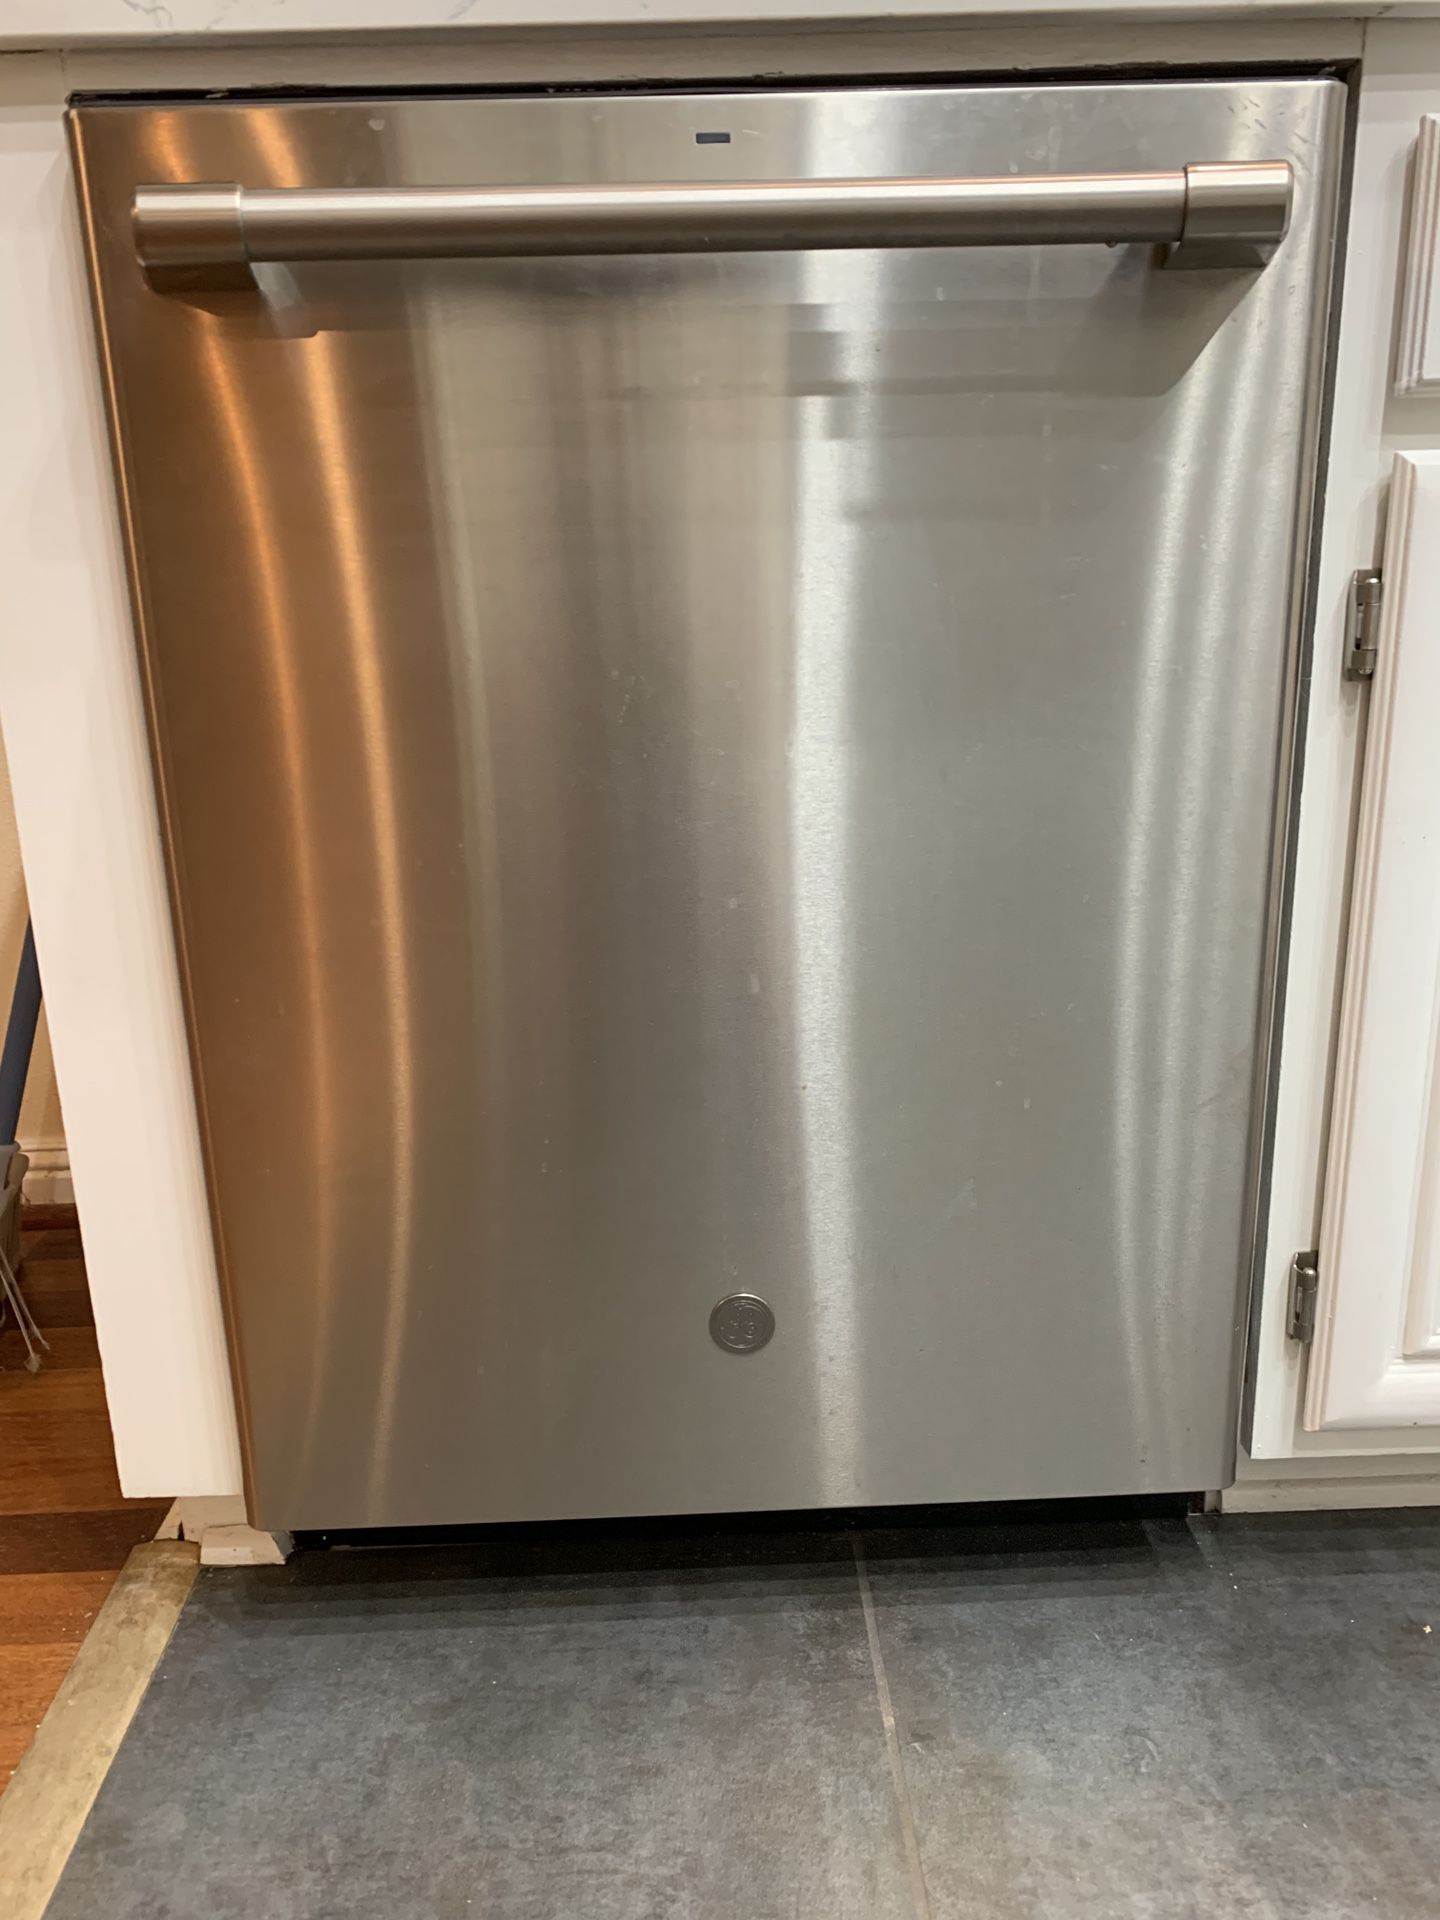 GE Dishwasher-stainless steel